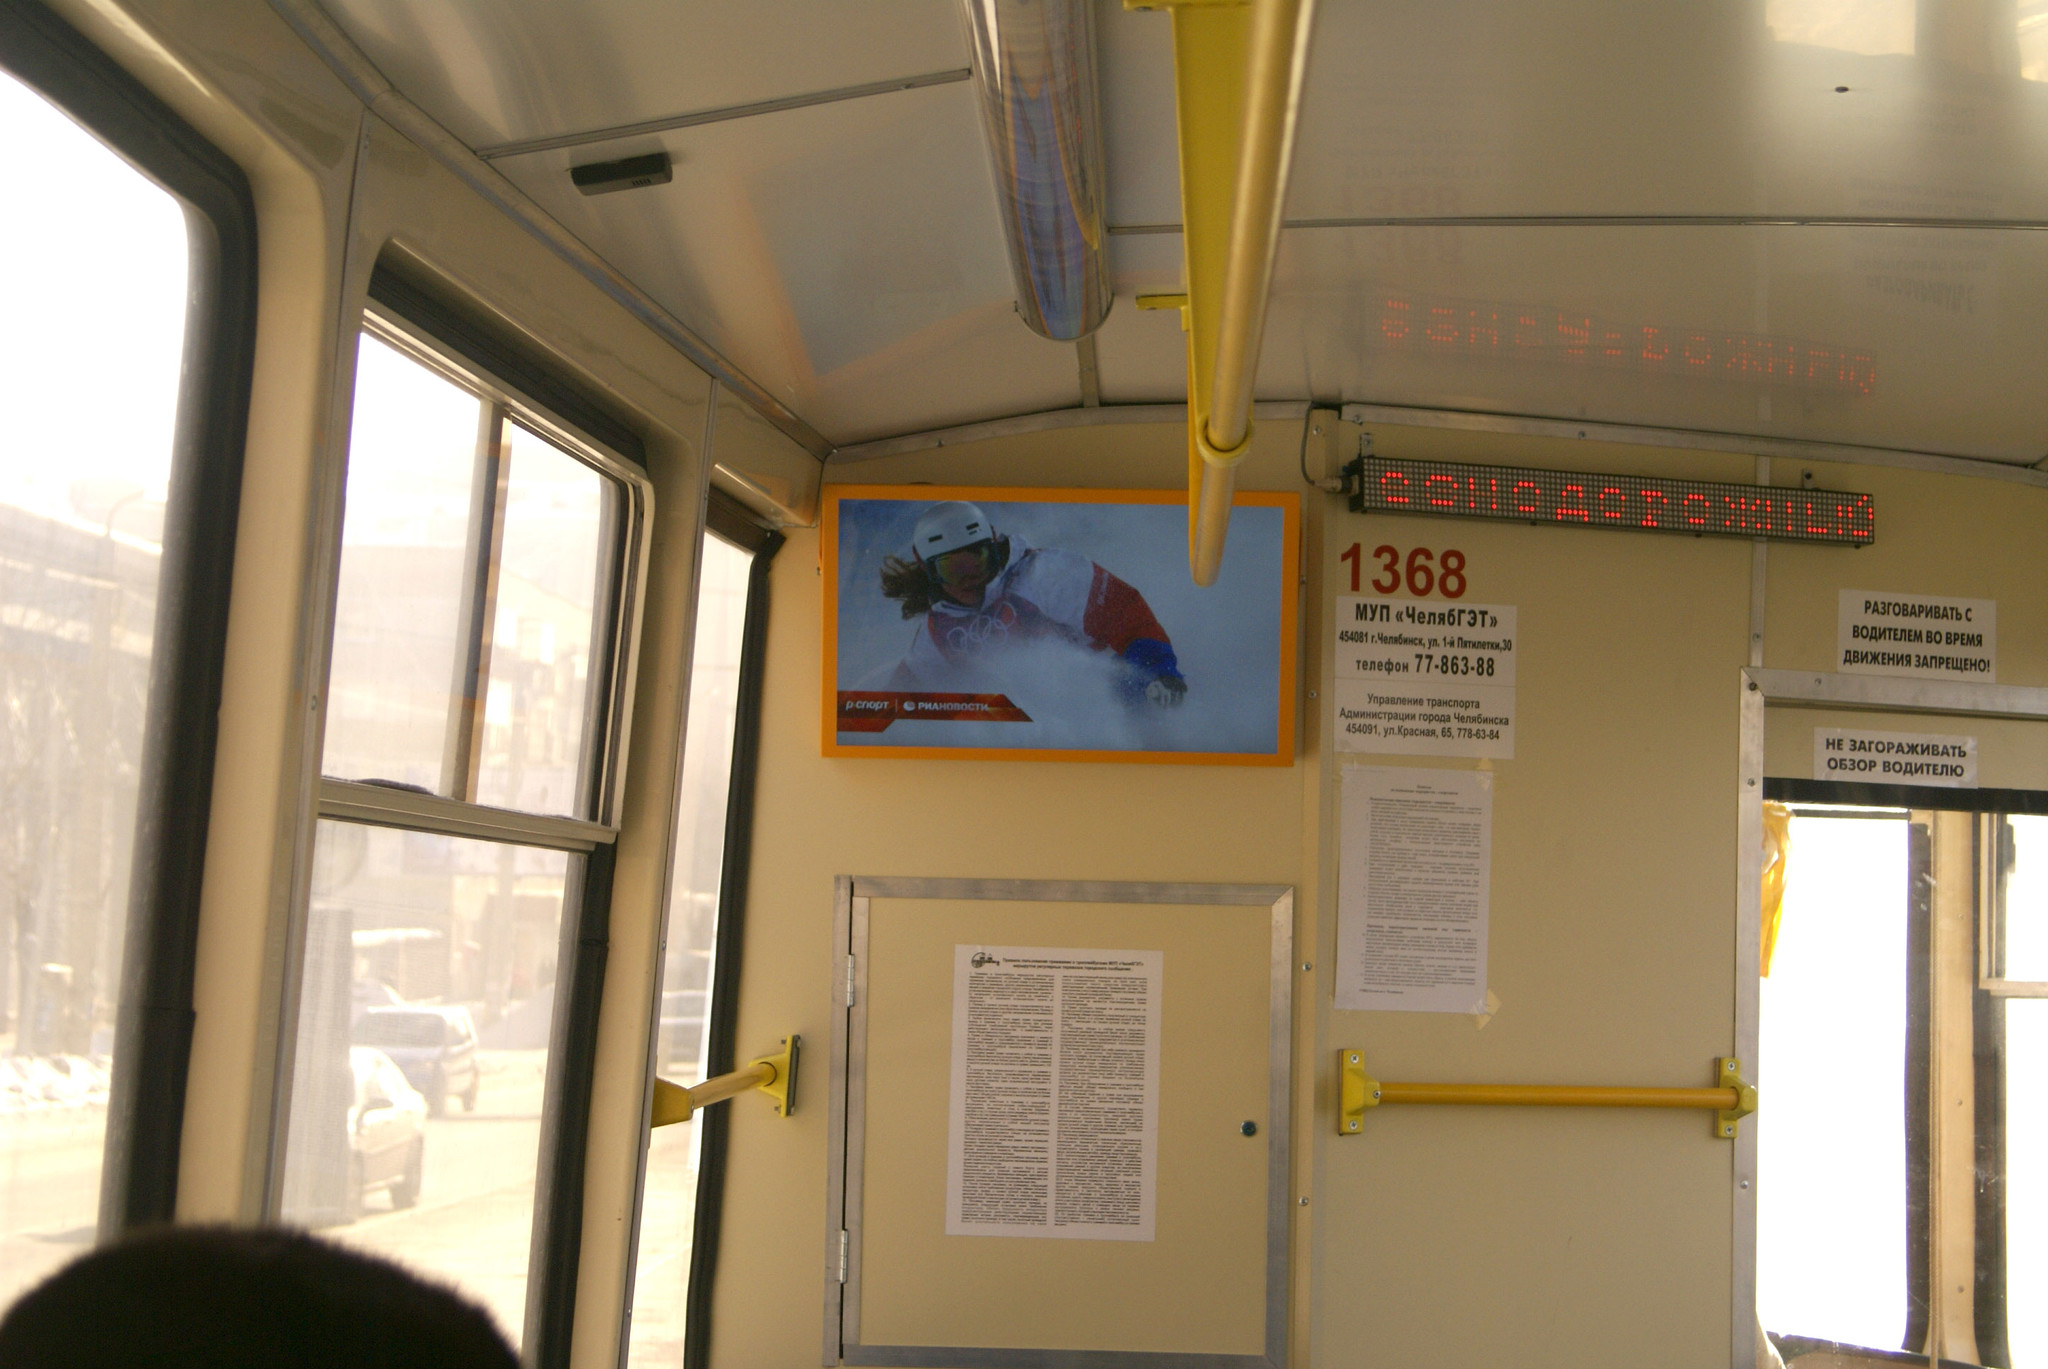 Фото монитора в общественном транспорте с кадрами Олимпиады в Сочи от РИА НОВОСТИ